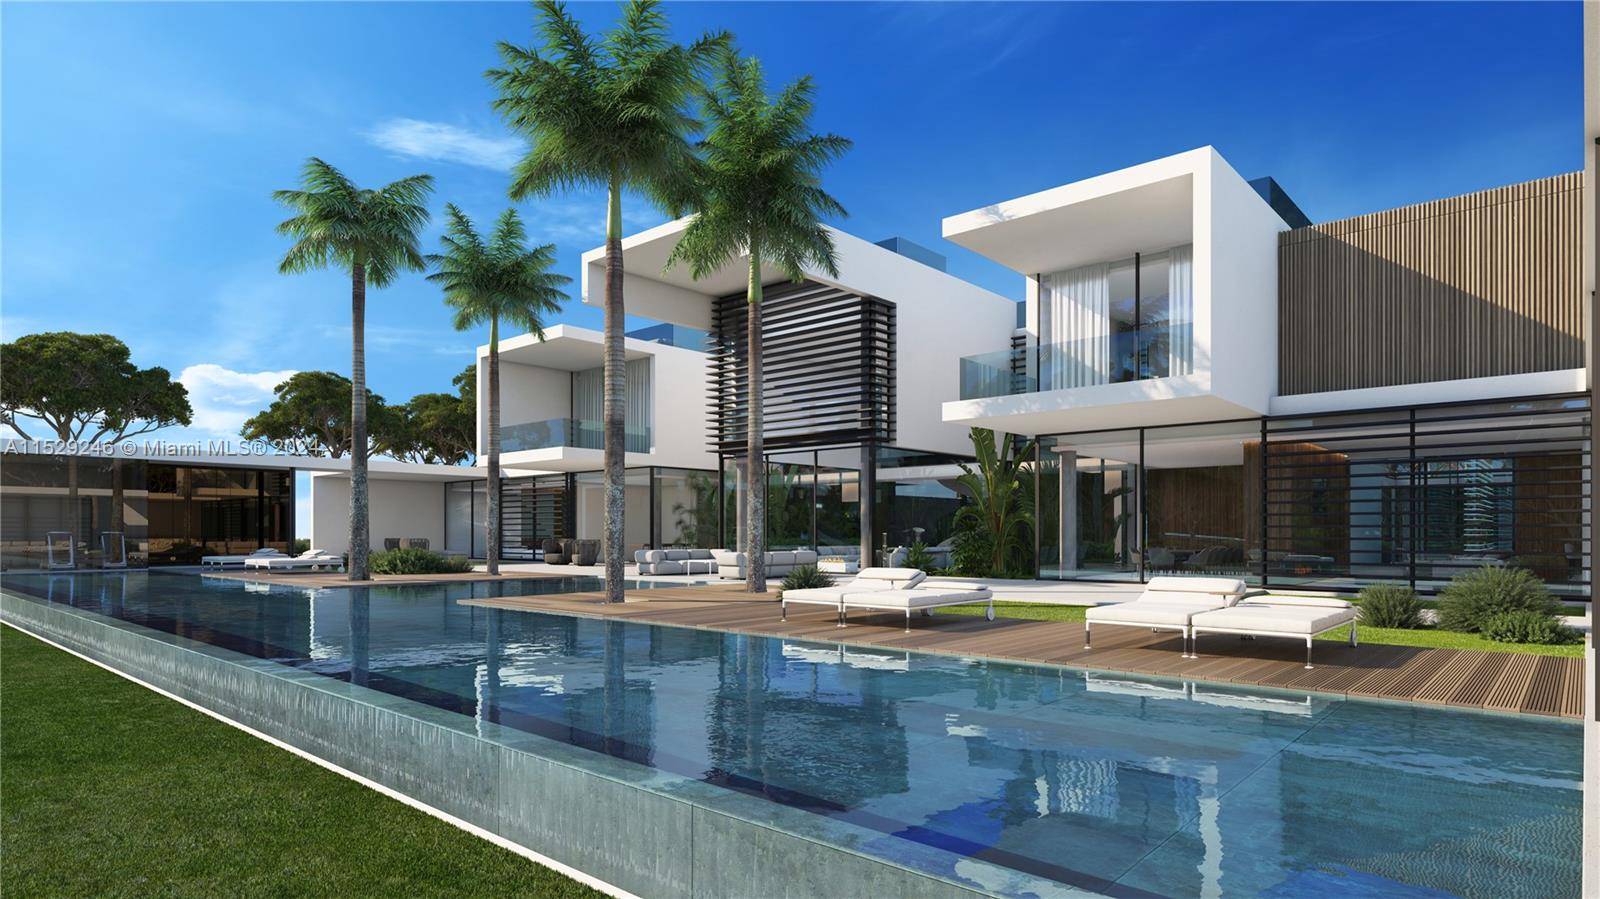 A striking contemporary villa, Estate E is under development in the exclusive ultra luxury gated community of AKAI Estates.